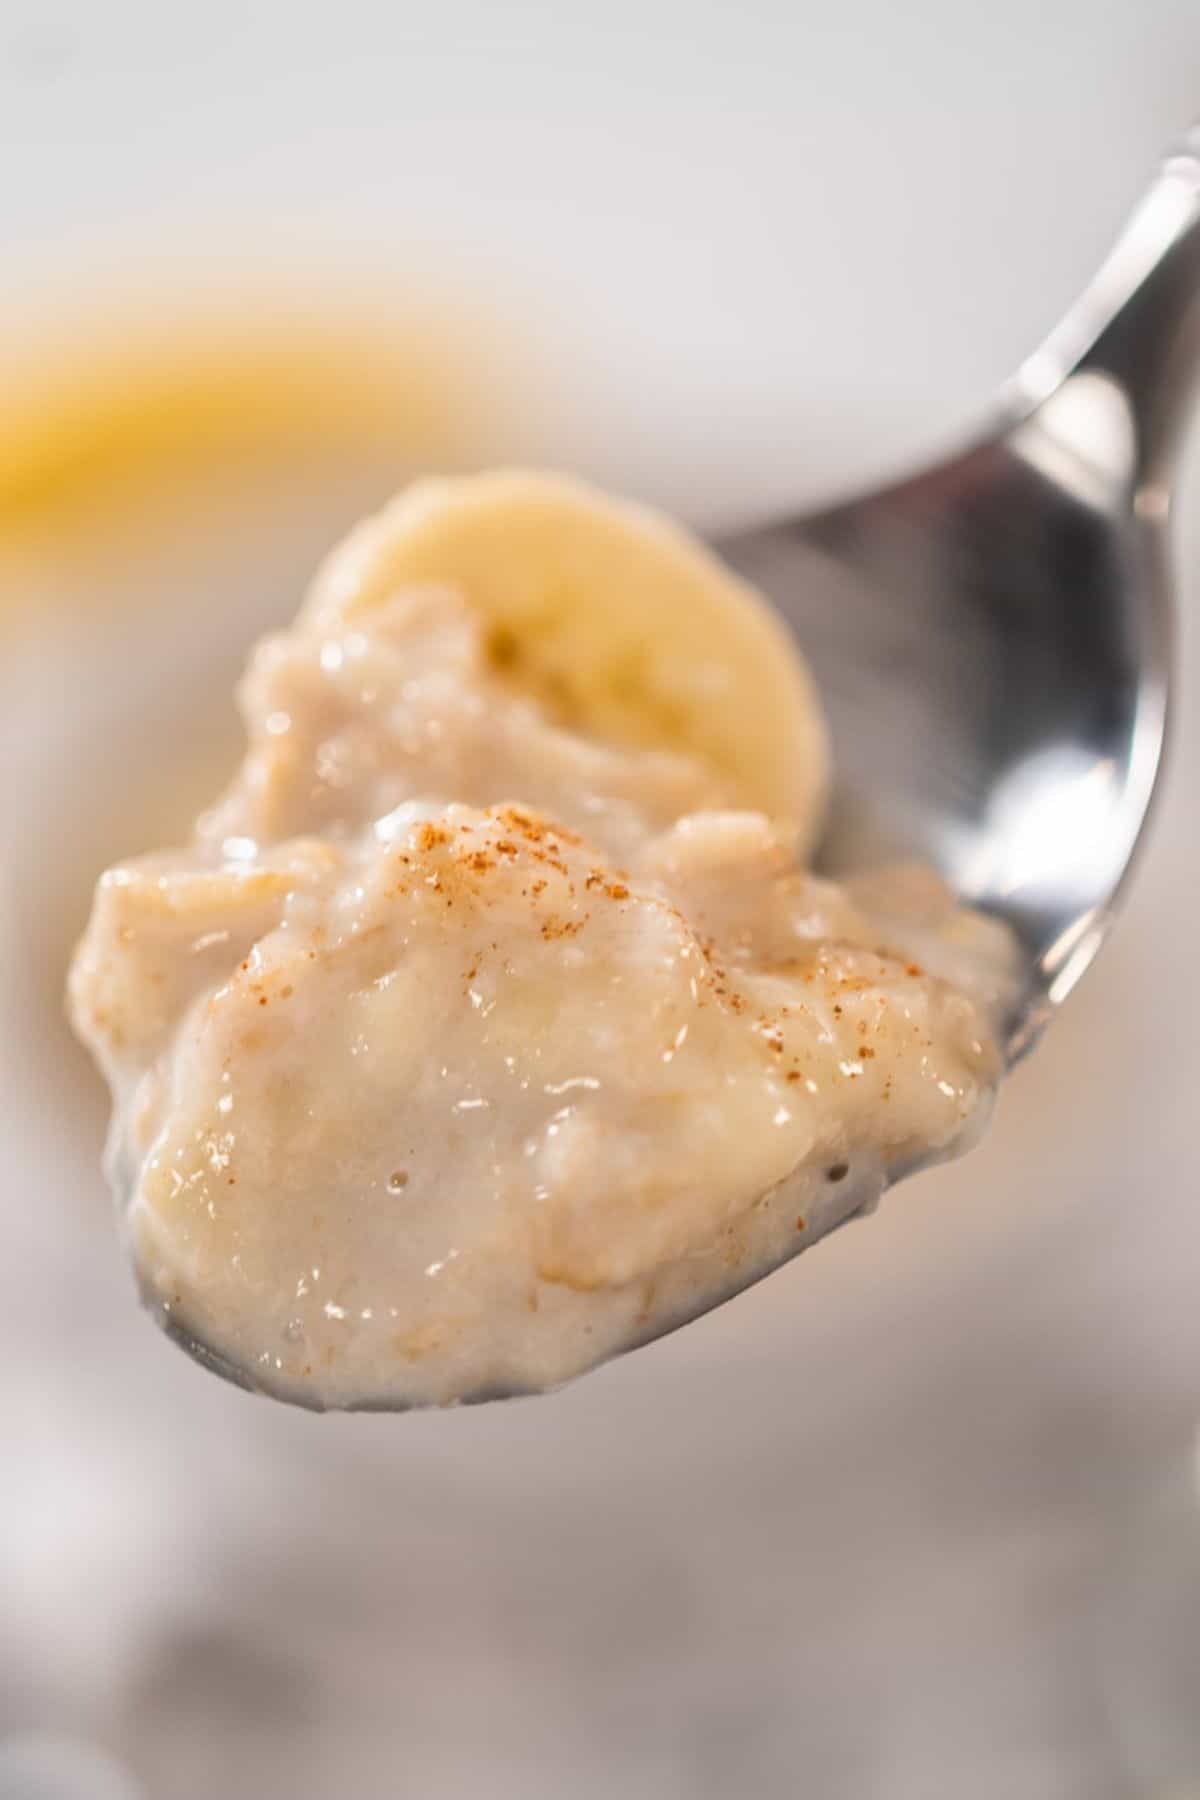 A close up spoonful of banana porridge with a dash of cinnamon and slice of banana.